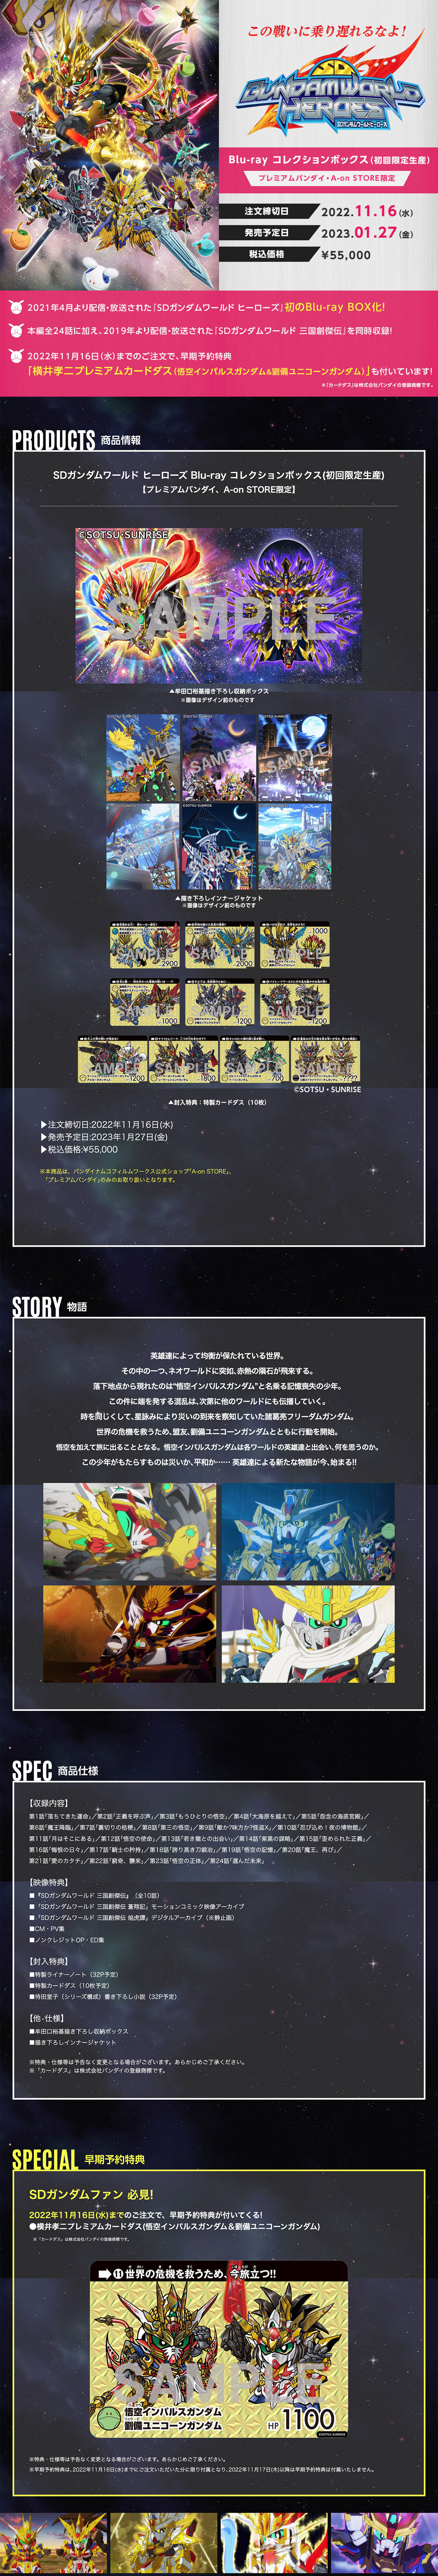 SD Gundam World Heros Blu-ray Collection Box